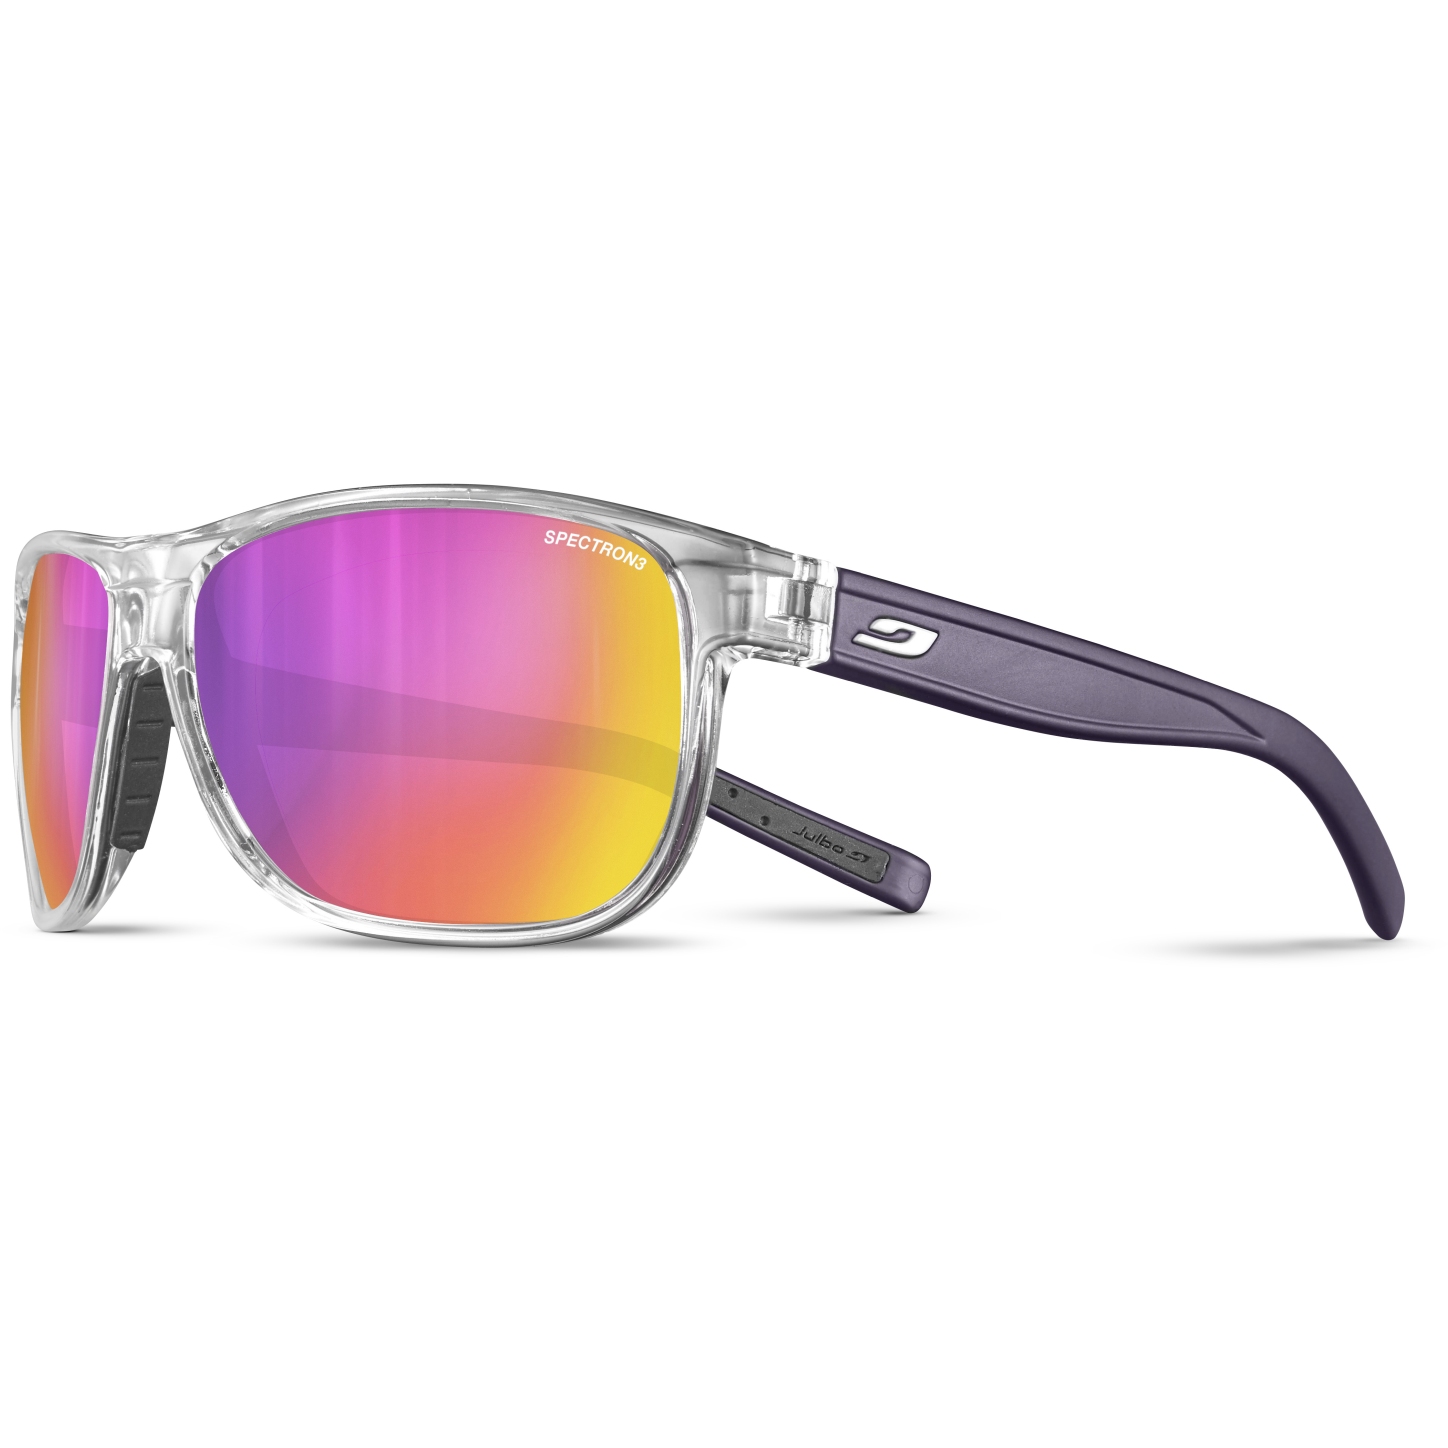 Picture of Julbo Renegade M Spectron 3CF Sunglasses - Scristal / Violet